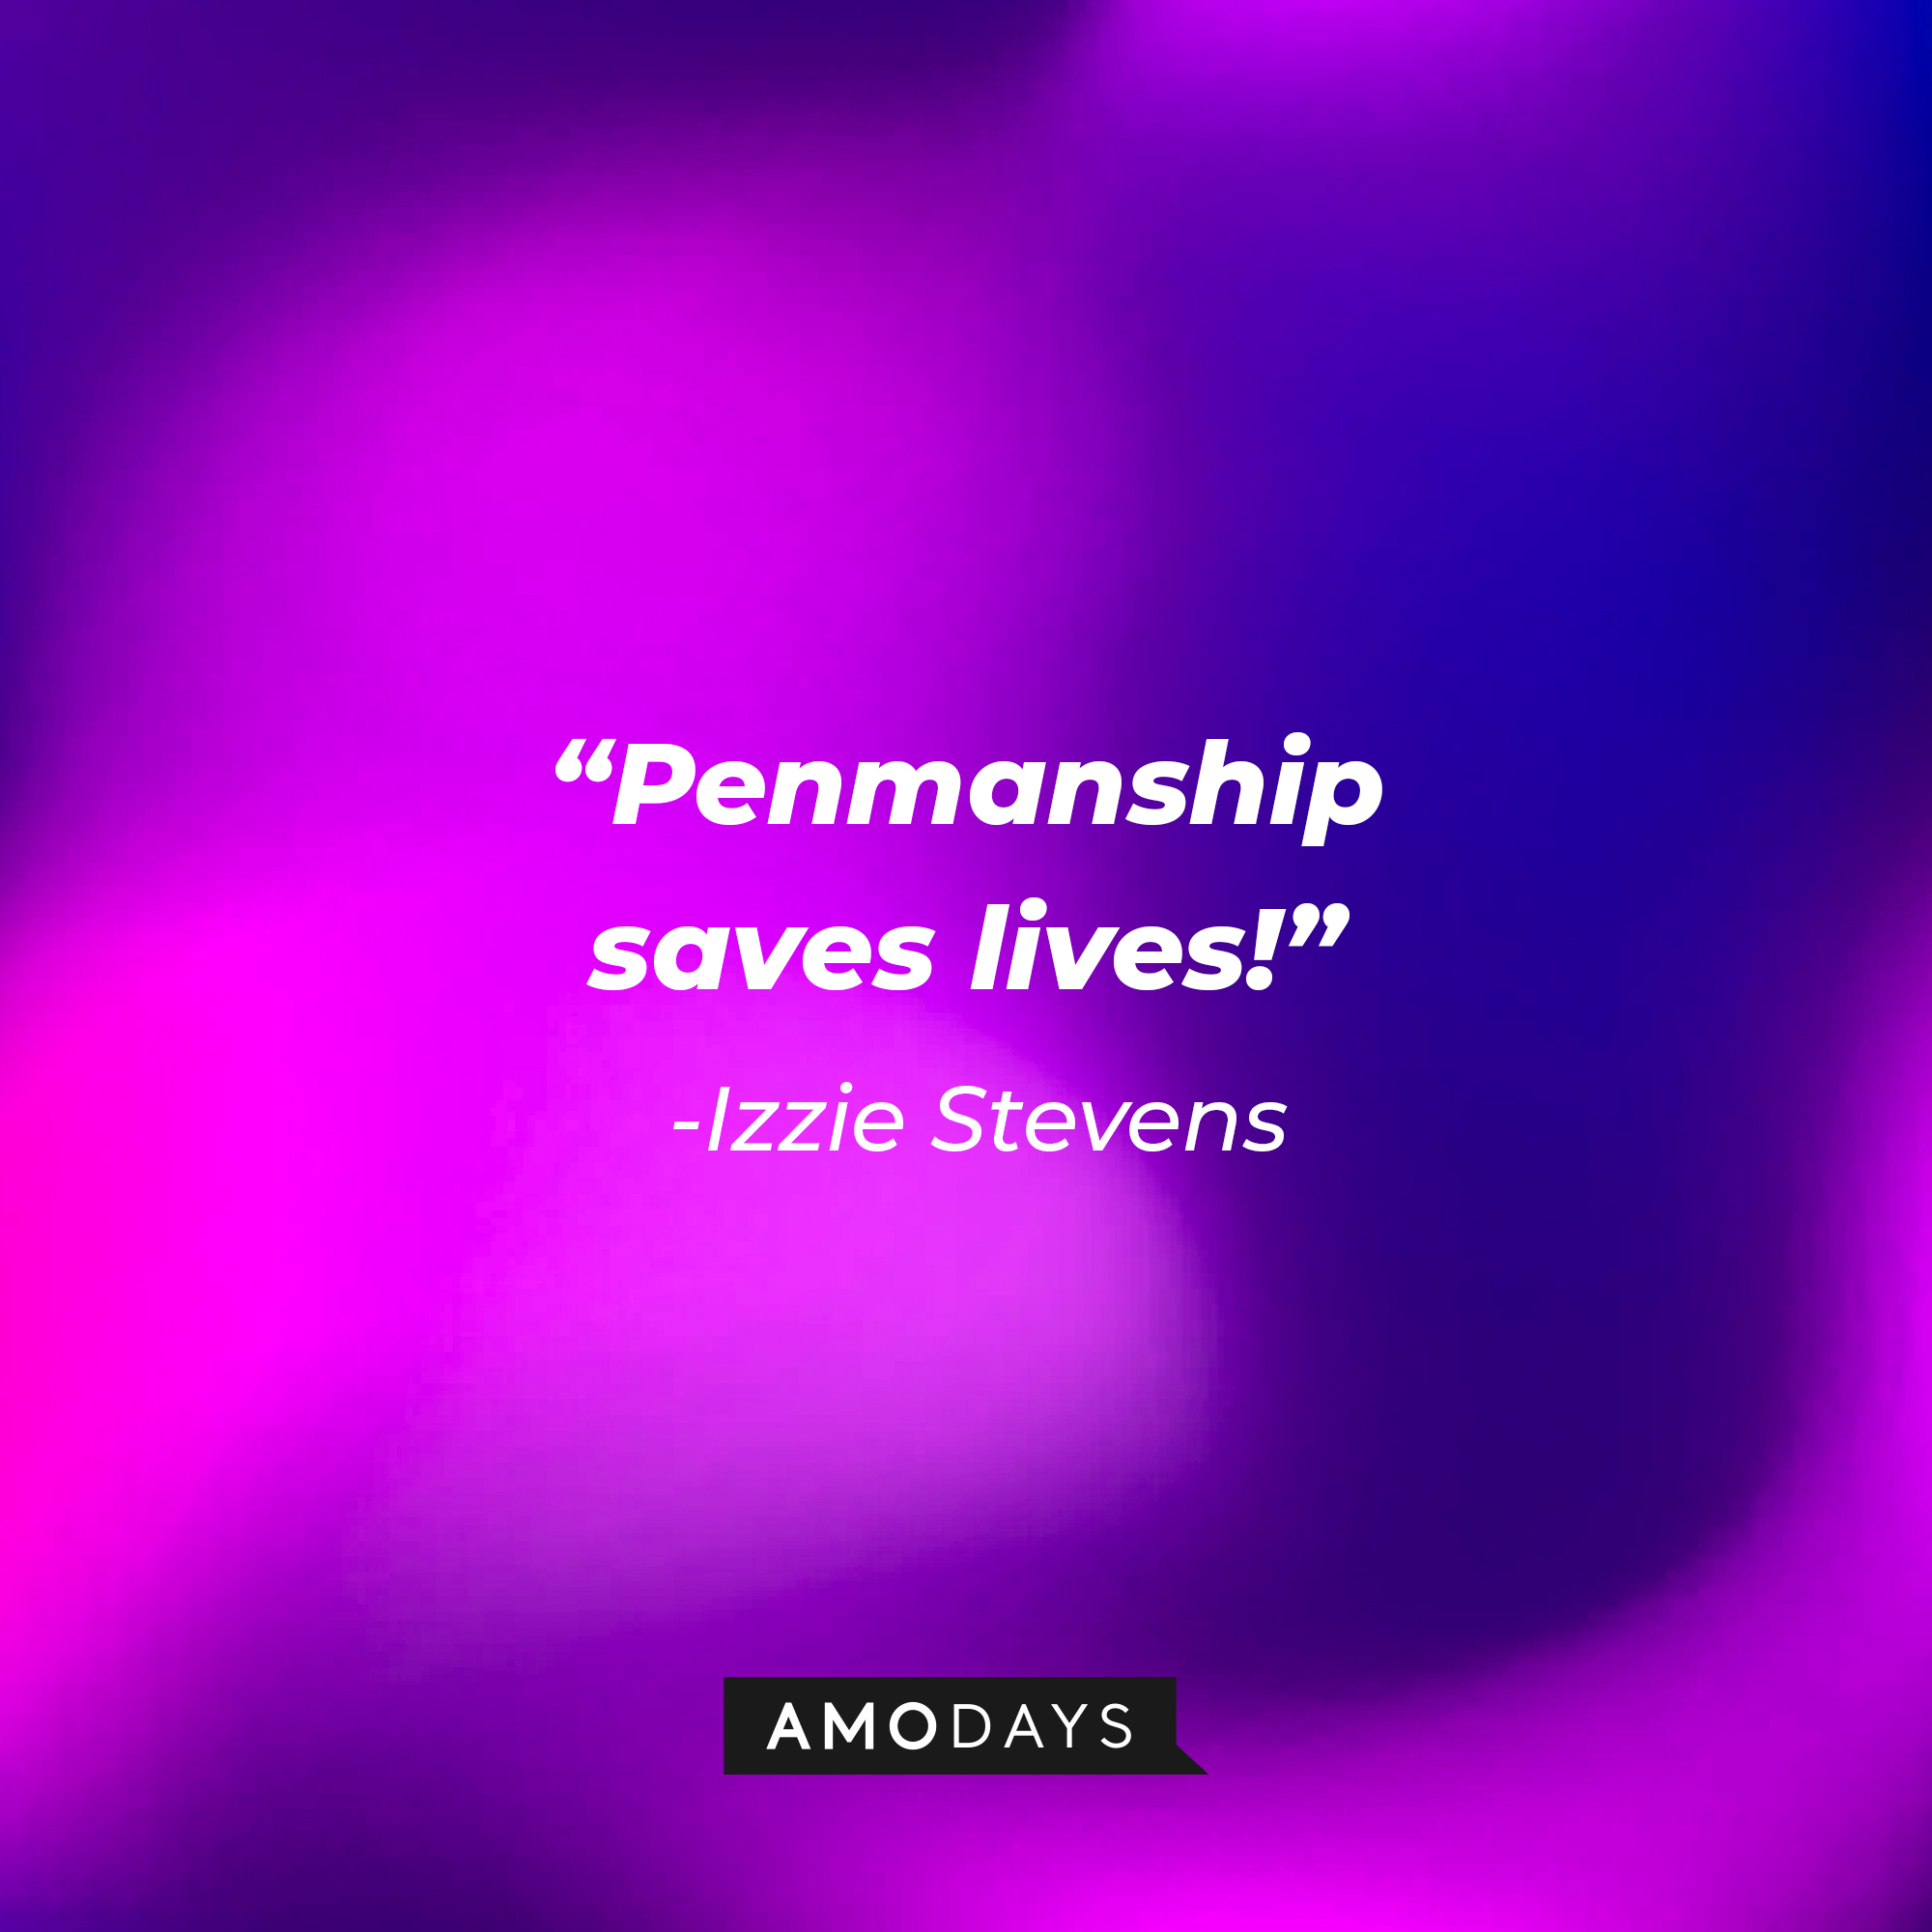 Izzie Stevens's quote: "Penmanship saves lives!" | Image: Amodays